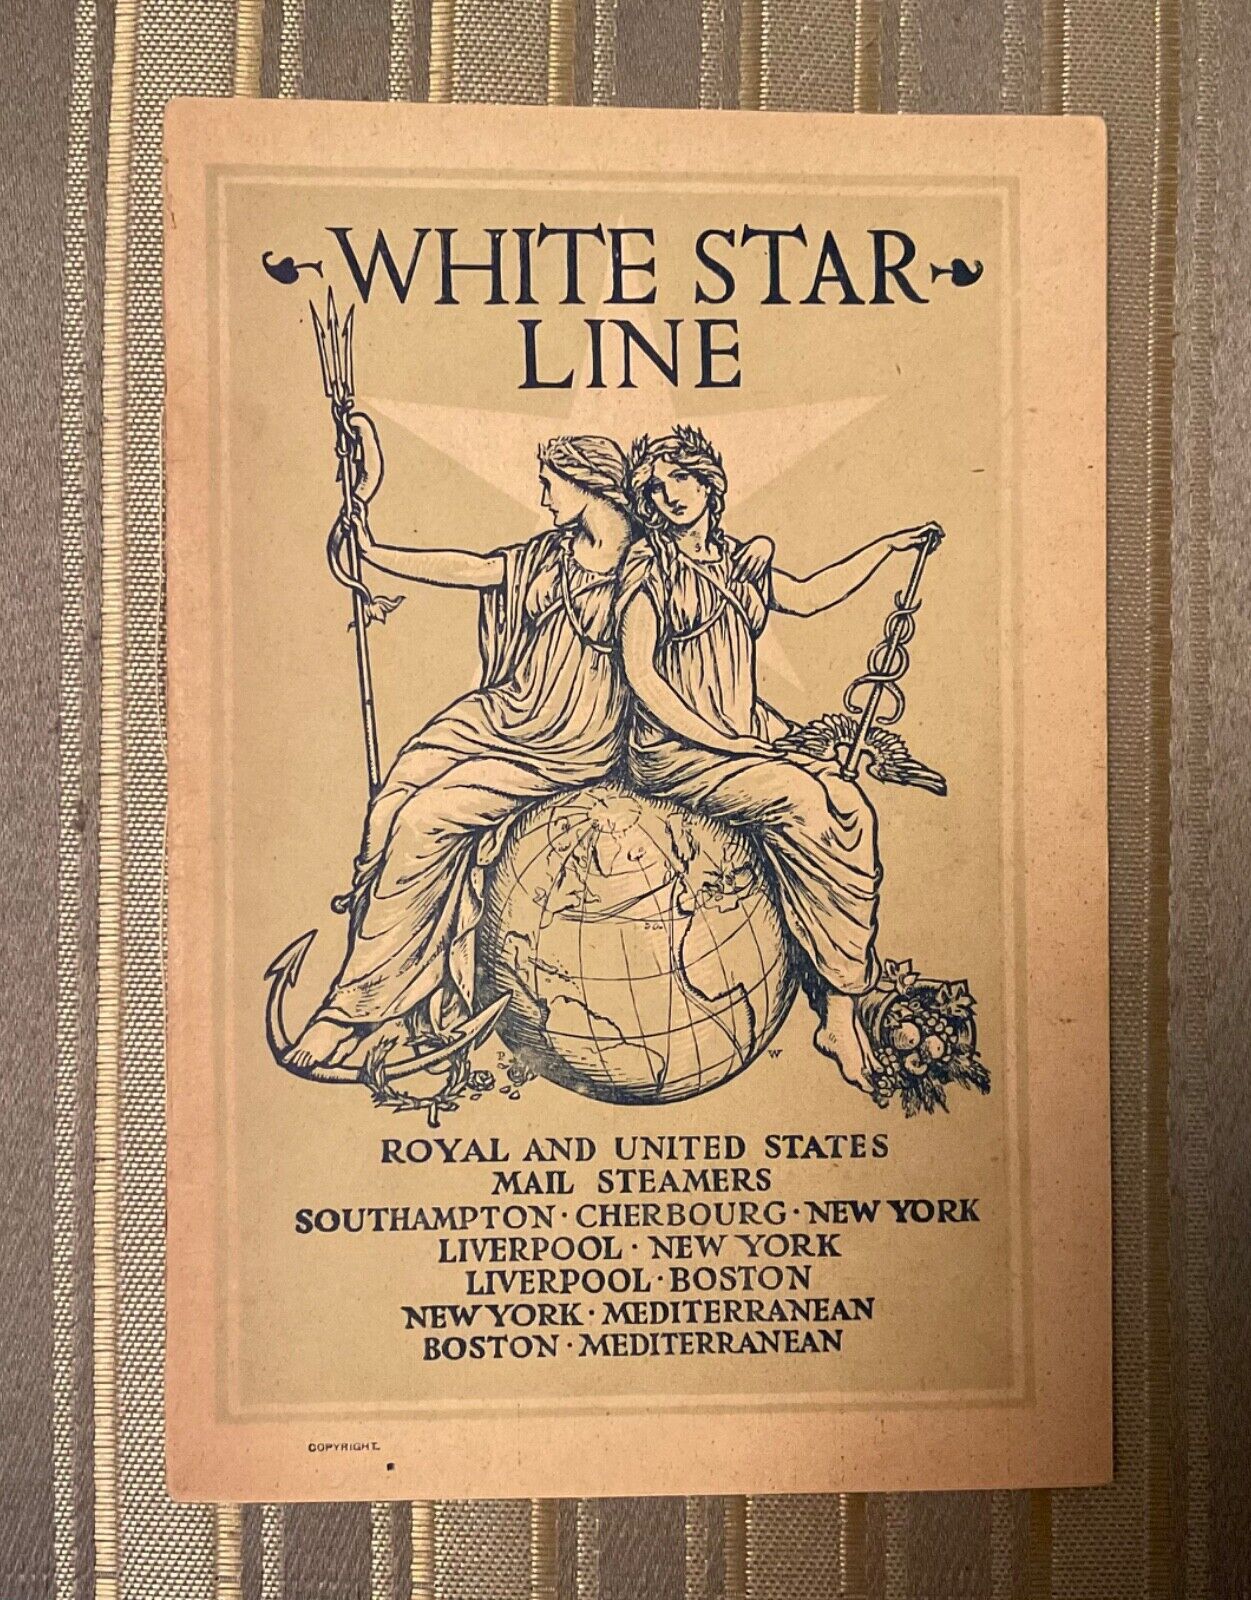 WHITE STAR LINE CYMRIC 1908 PASSENGER LIST EARLY REF OLYMPIC TITANIC “BUILDING”